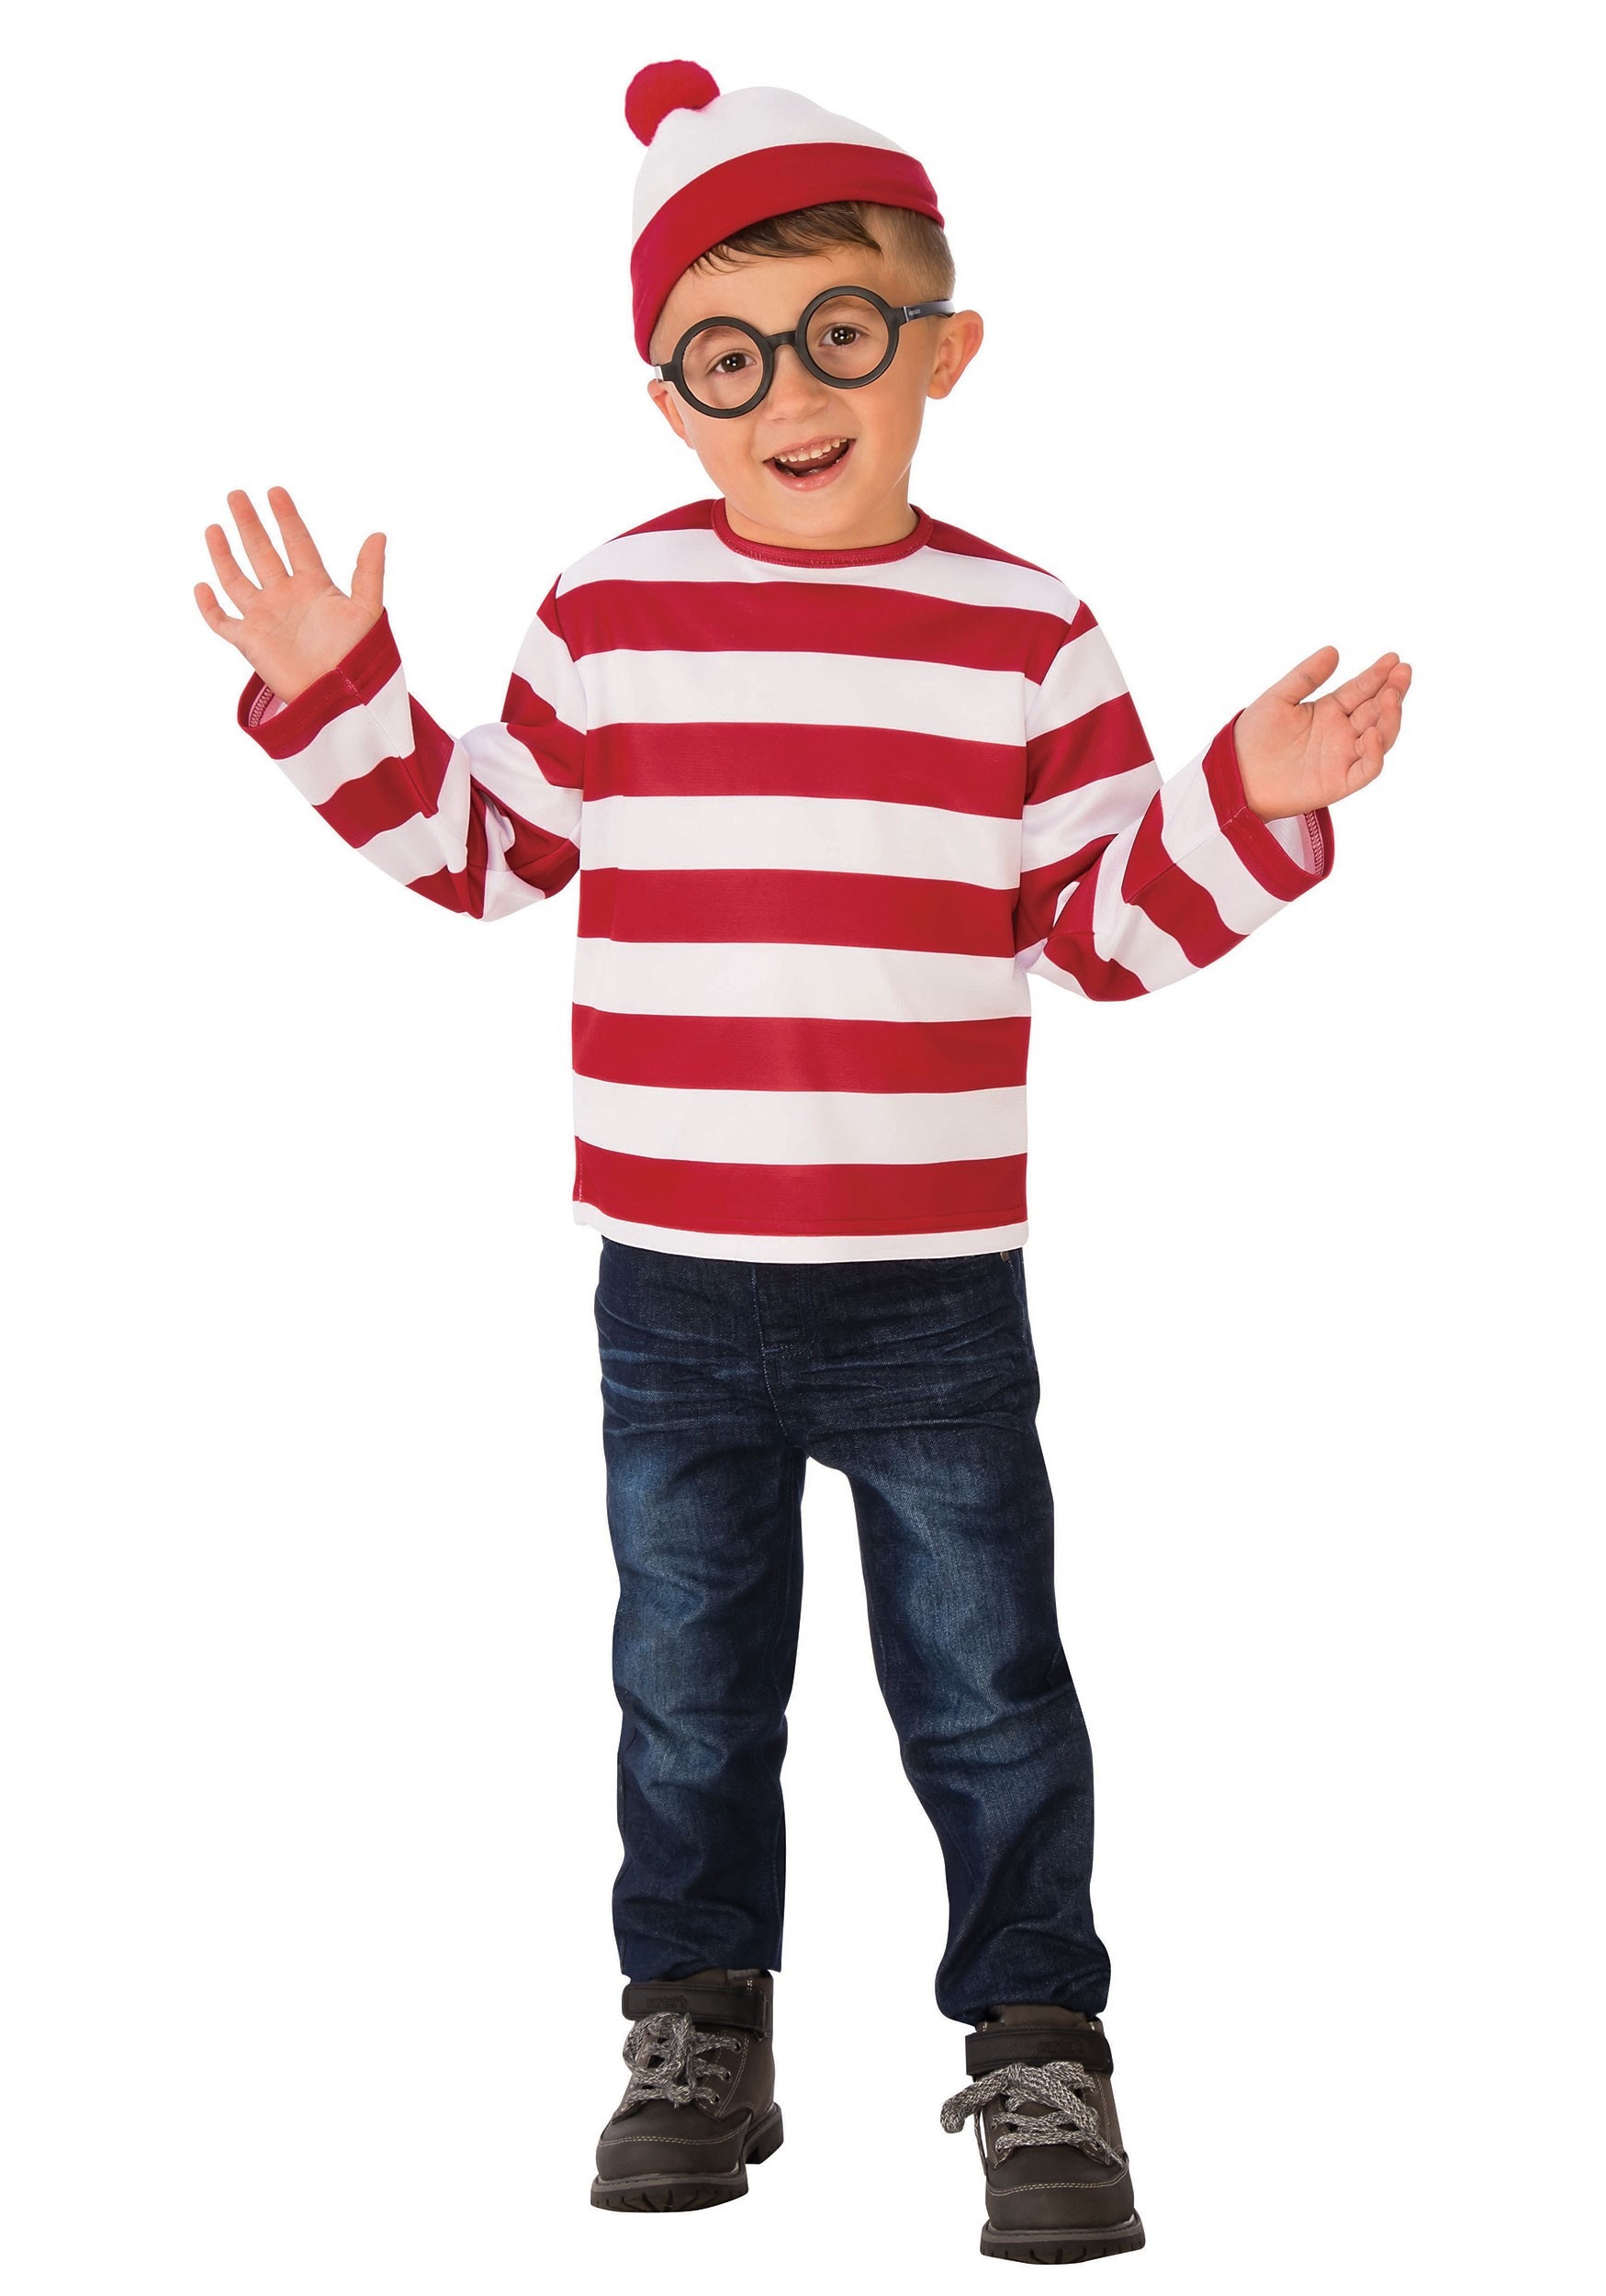 Where’s Waldo Kid’s Costume